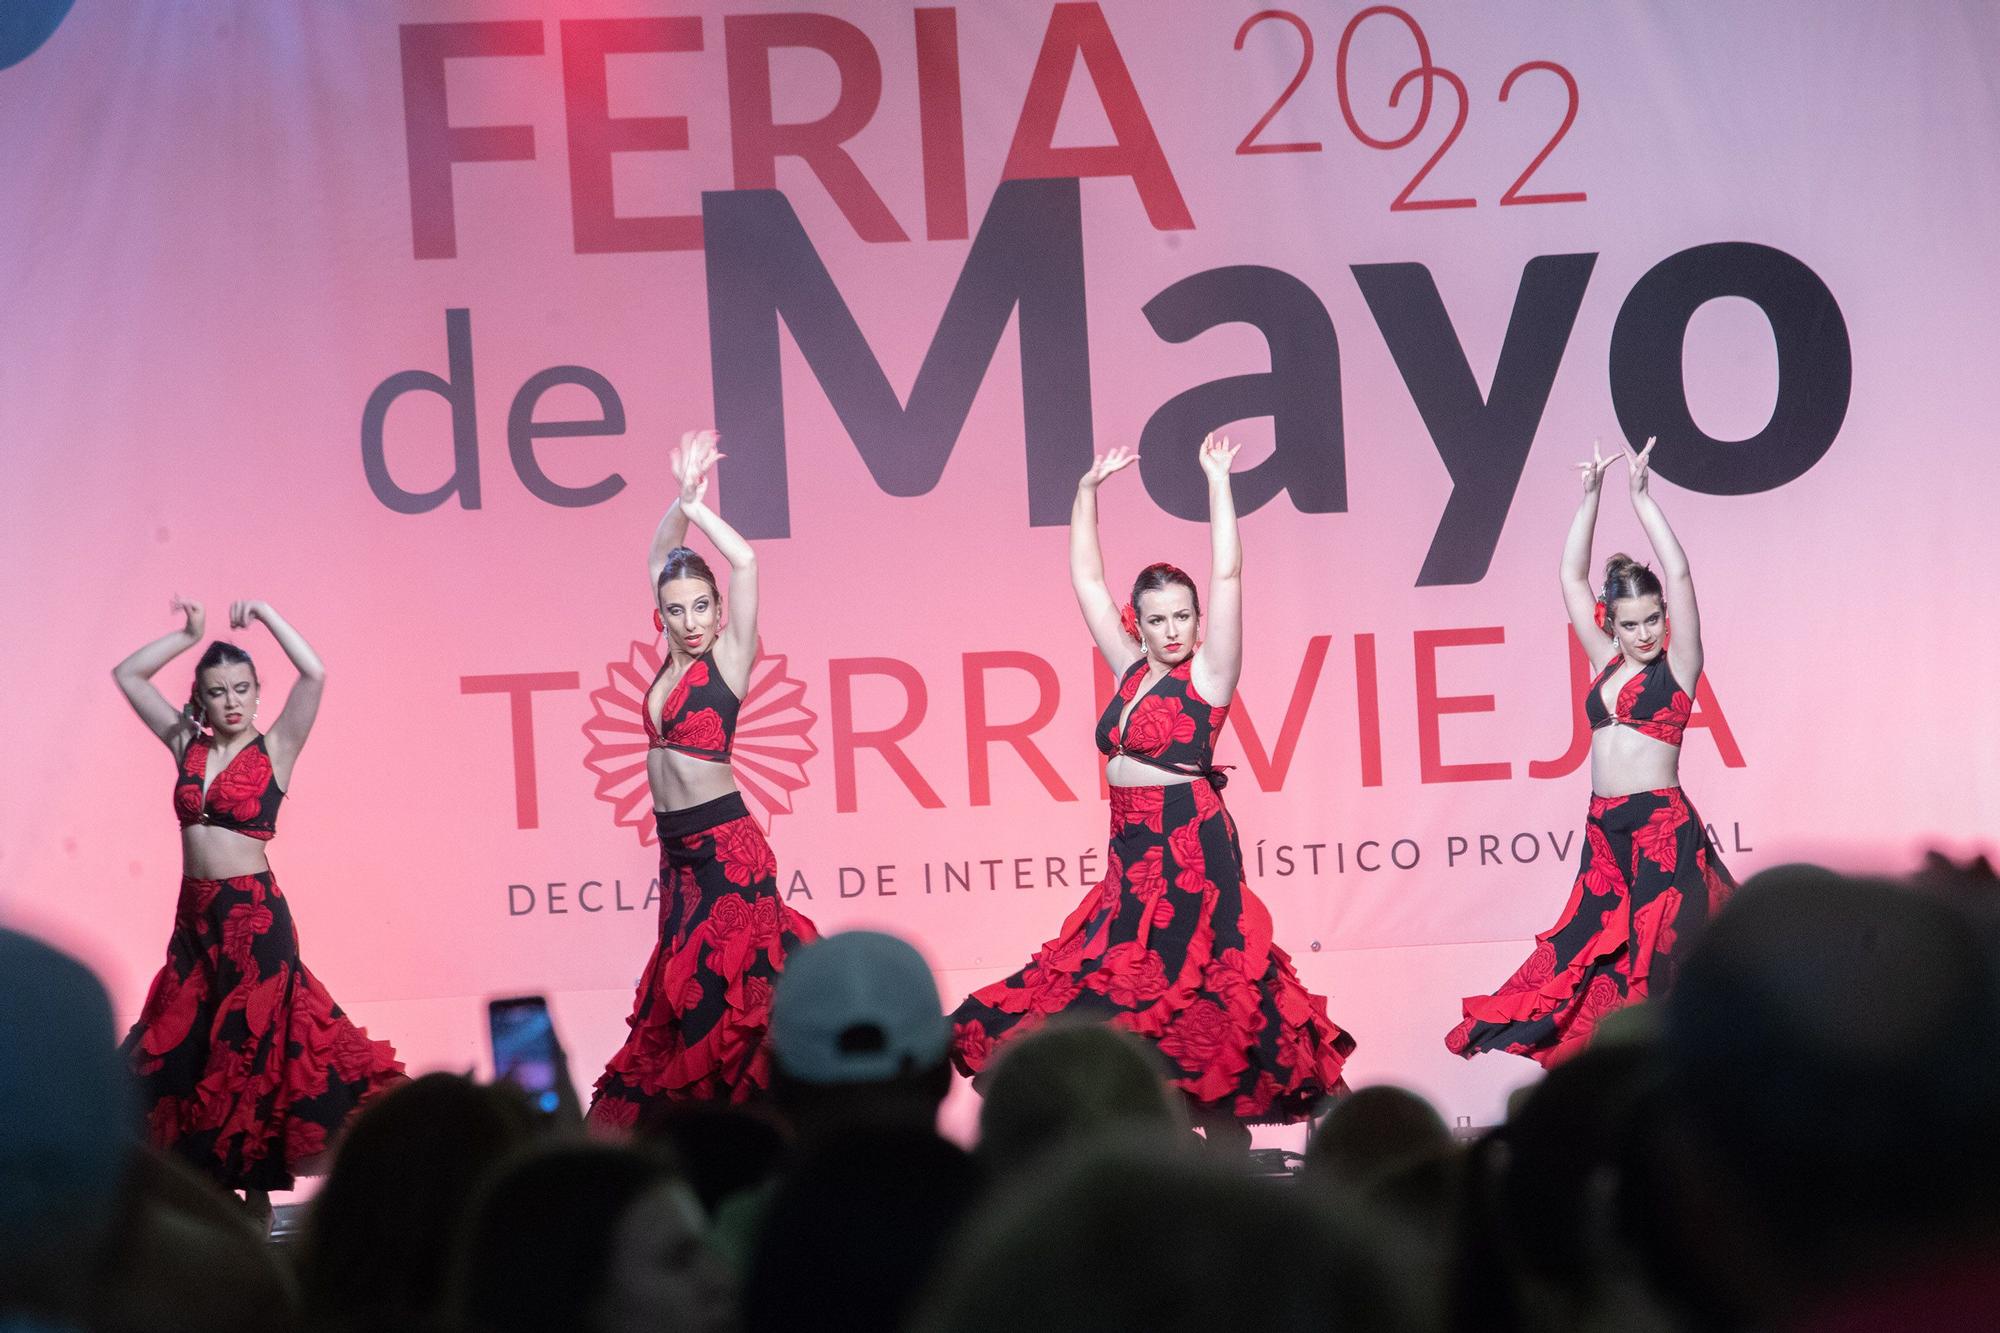 Feria de Mayo 2022 en Torrevieja